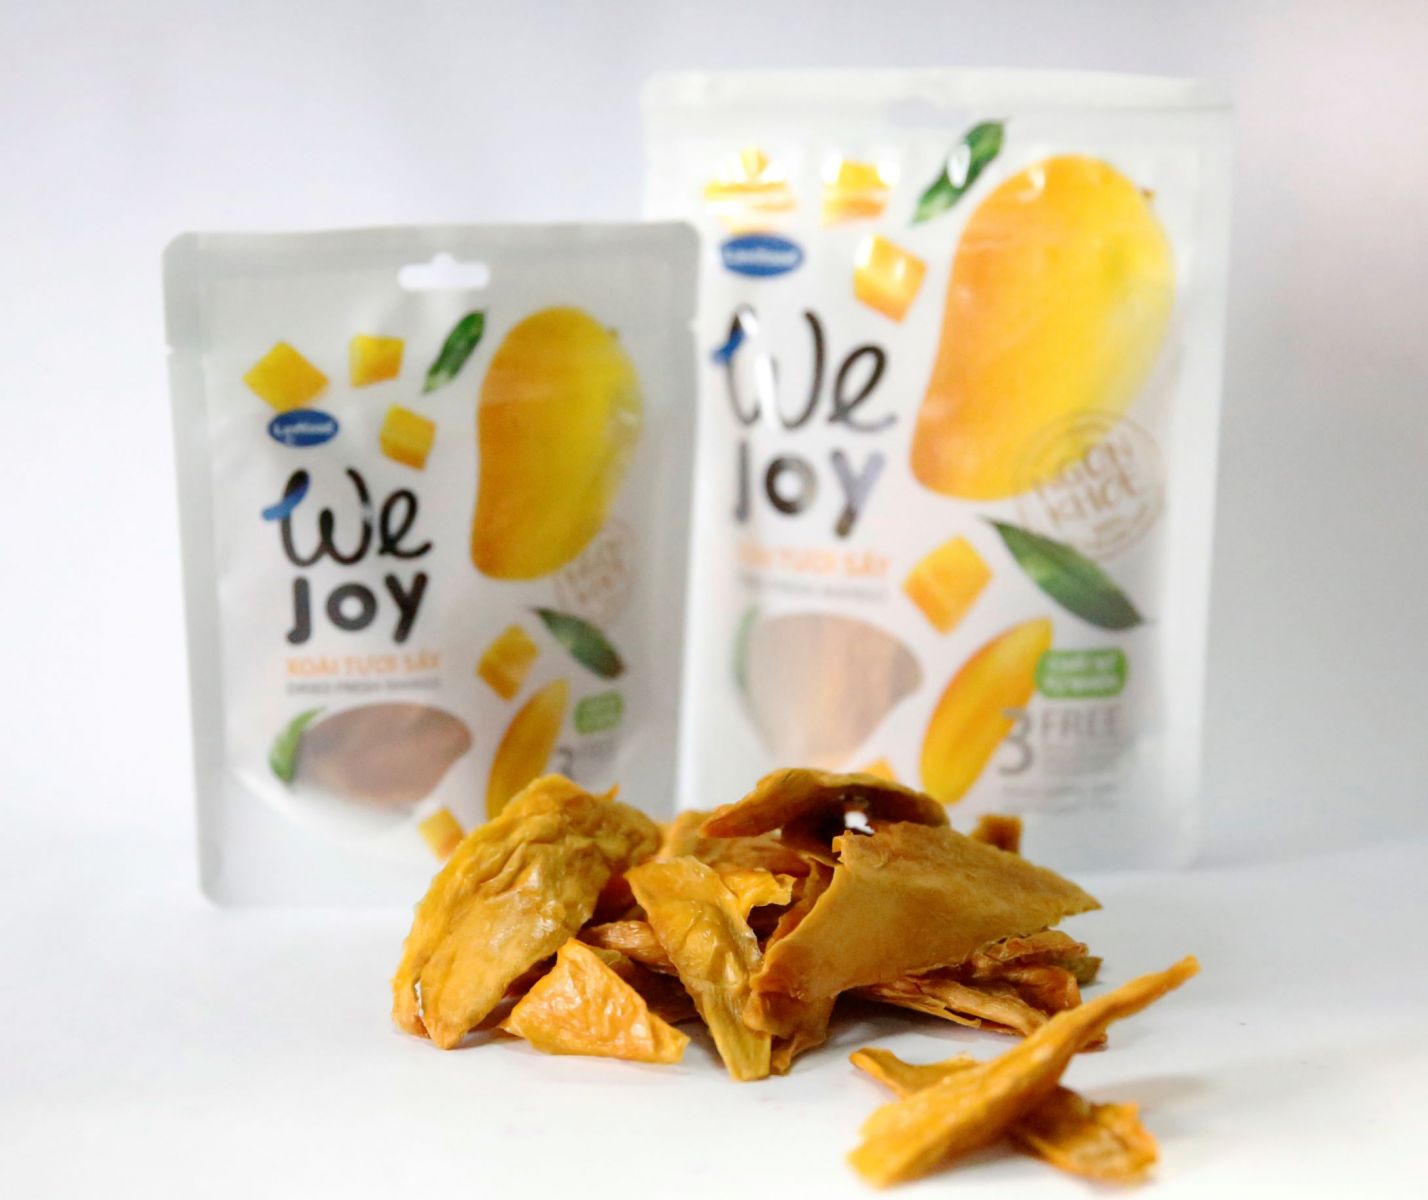 http://www.lavifood.com/en/products/dried-fruit-vegetables/we-joy-dried-mango